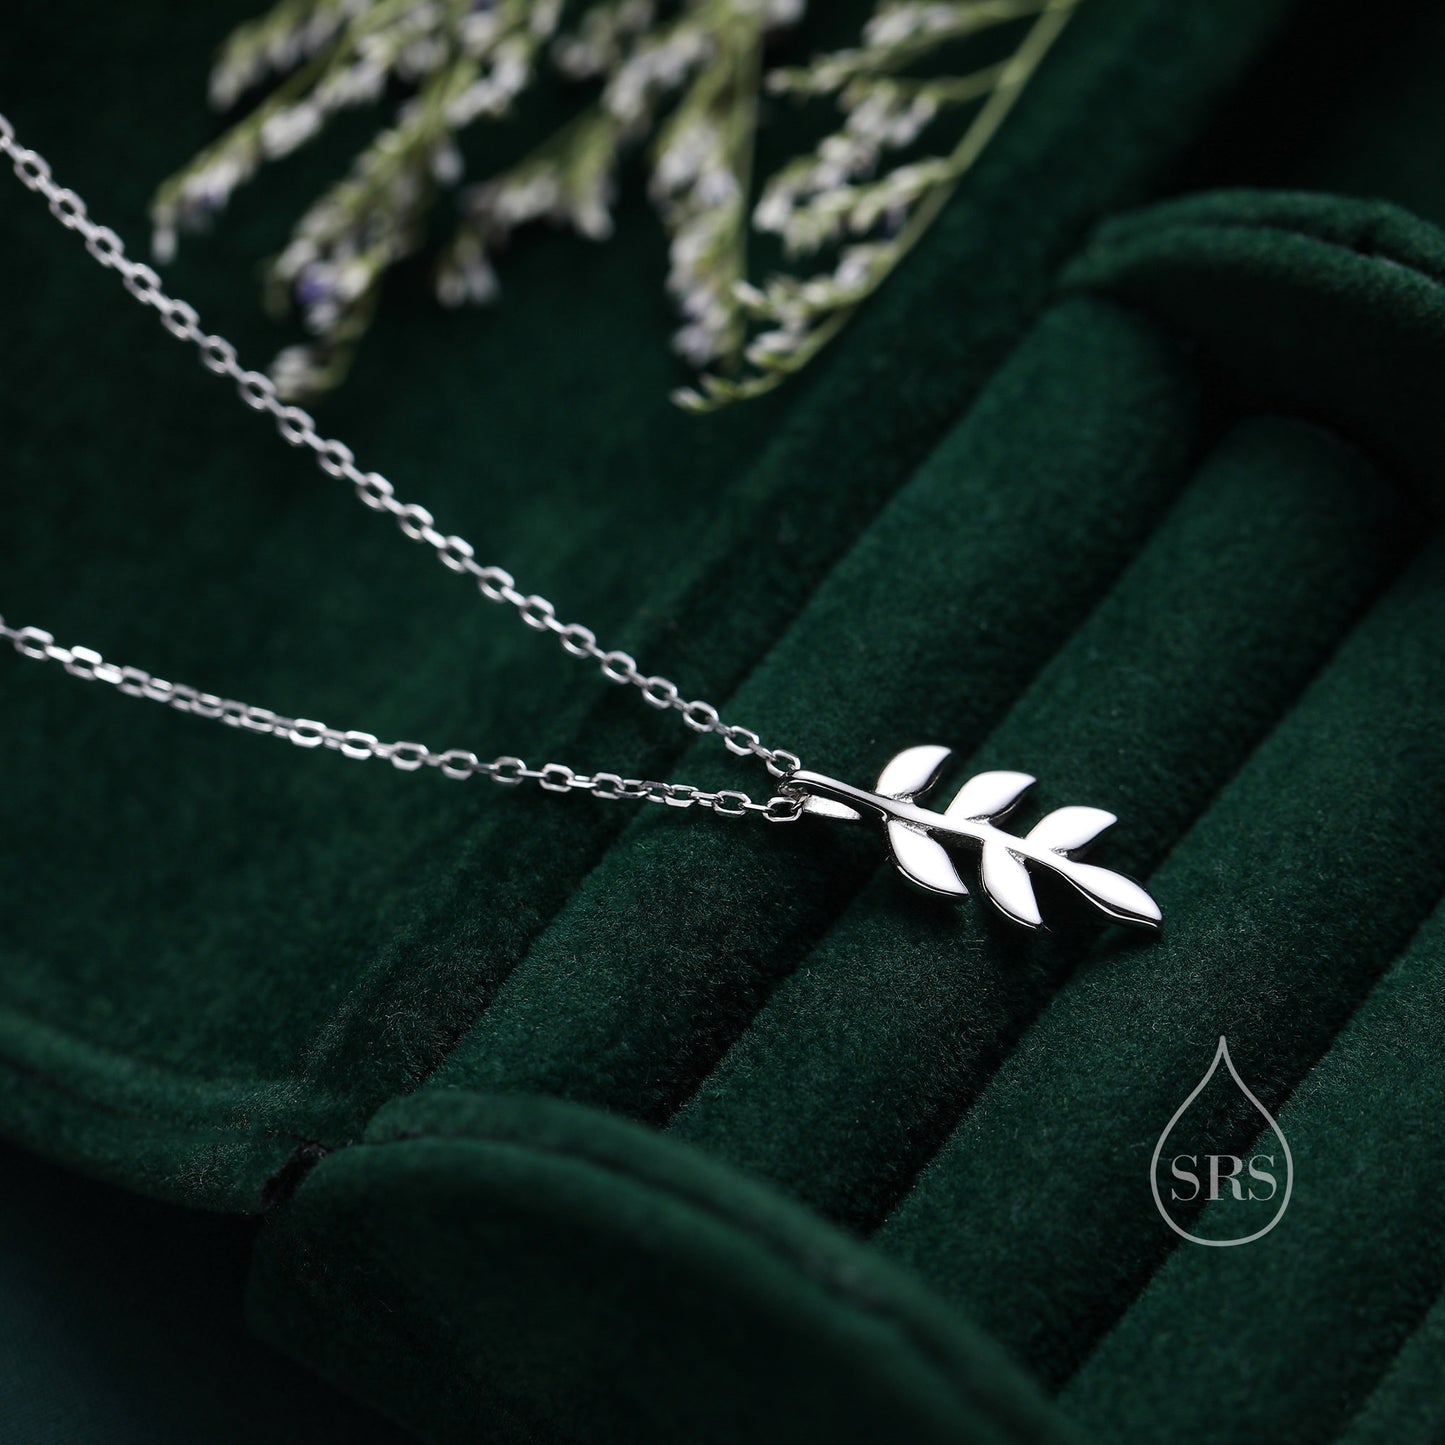 Delicate Leaf Pendant Necklace in Sterling Silver, Olive Brach Necklace,  Nature Inspired Tree Leaf Necklace